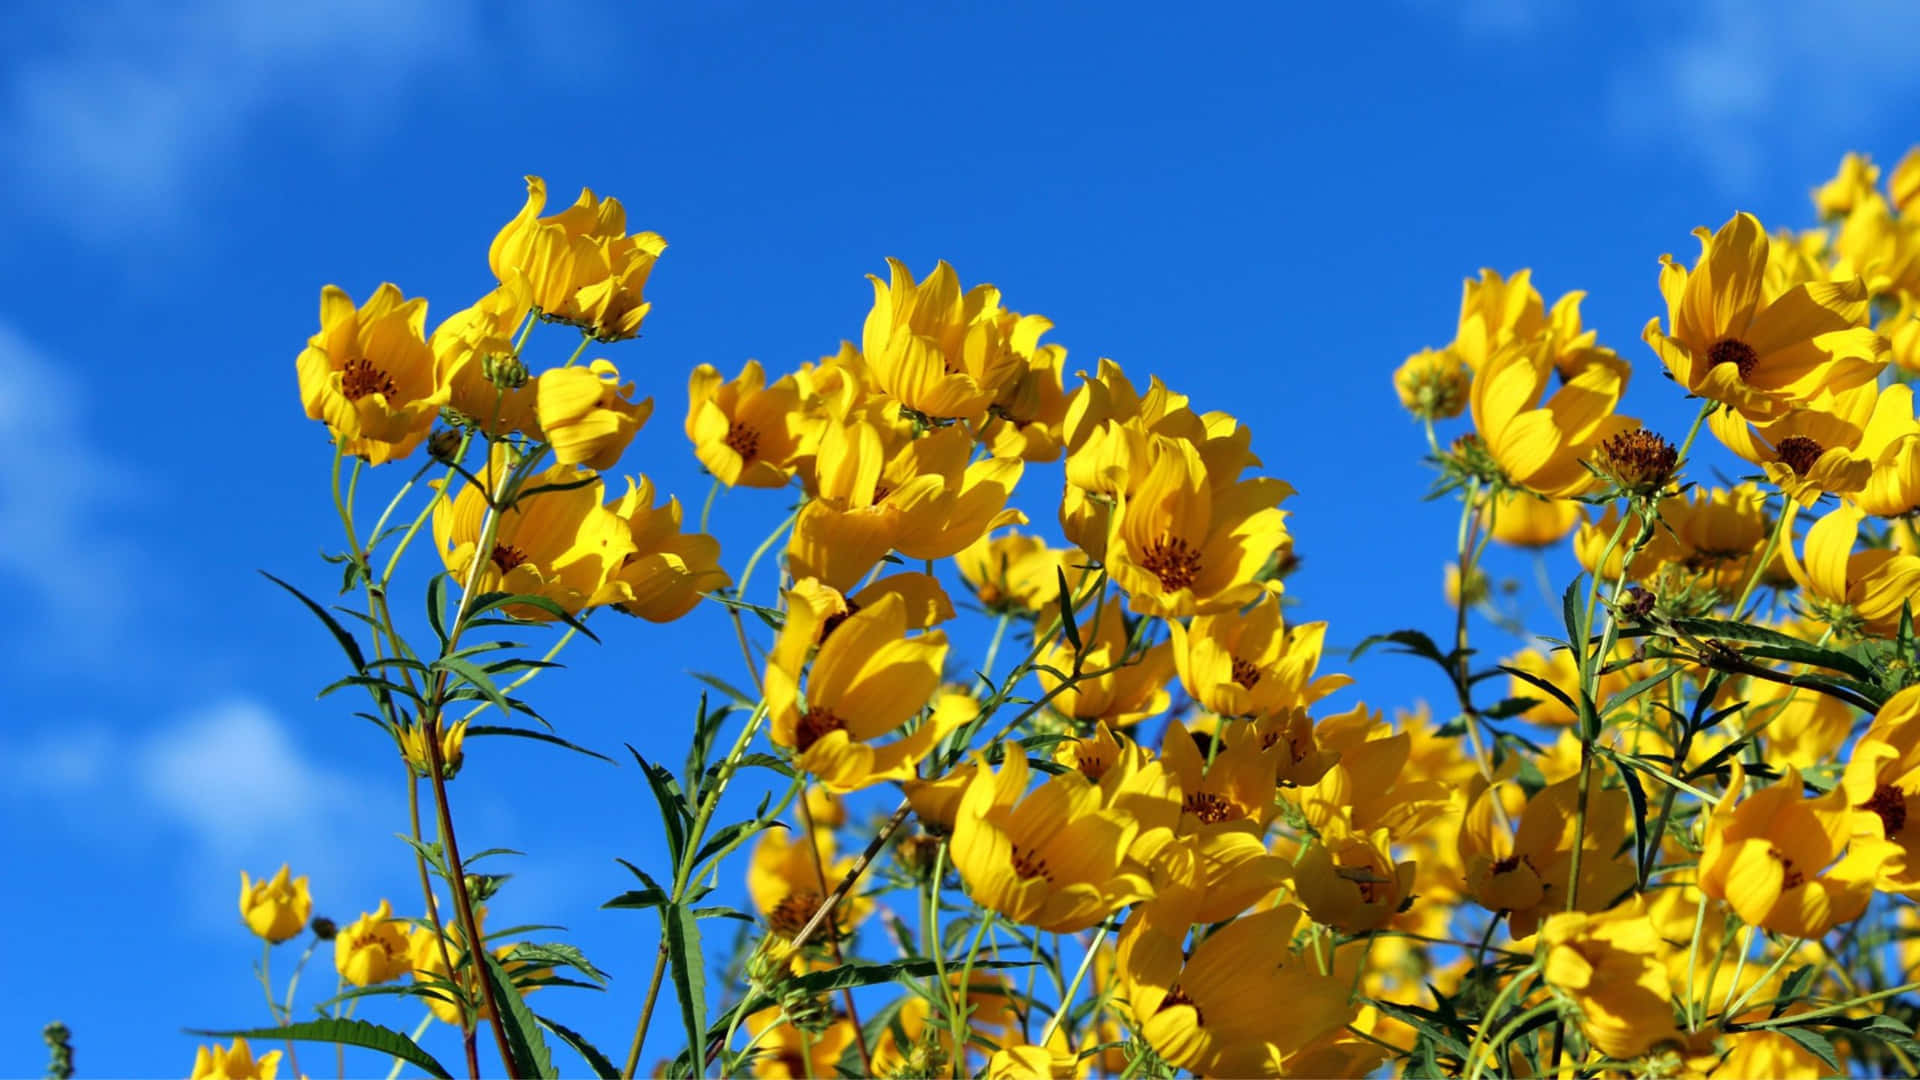 Sky View With Yellow Aesthetic Flower Desktop Wallpaper